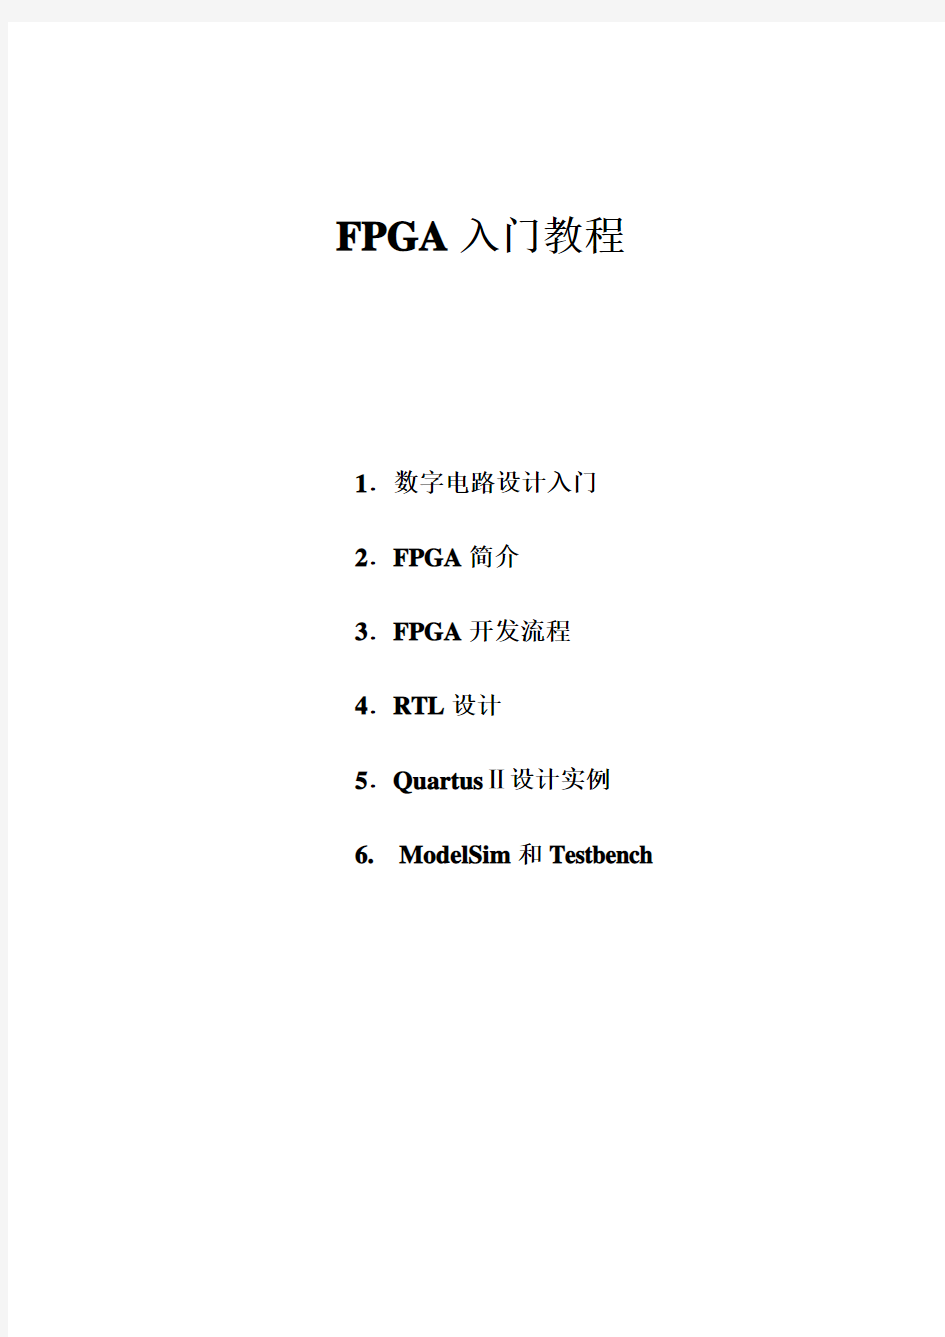 FPGA入门教程